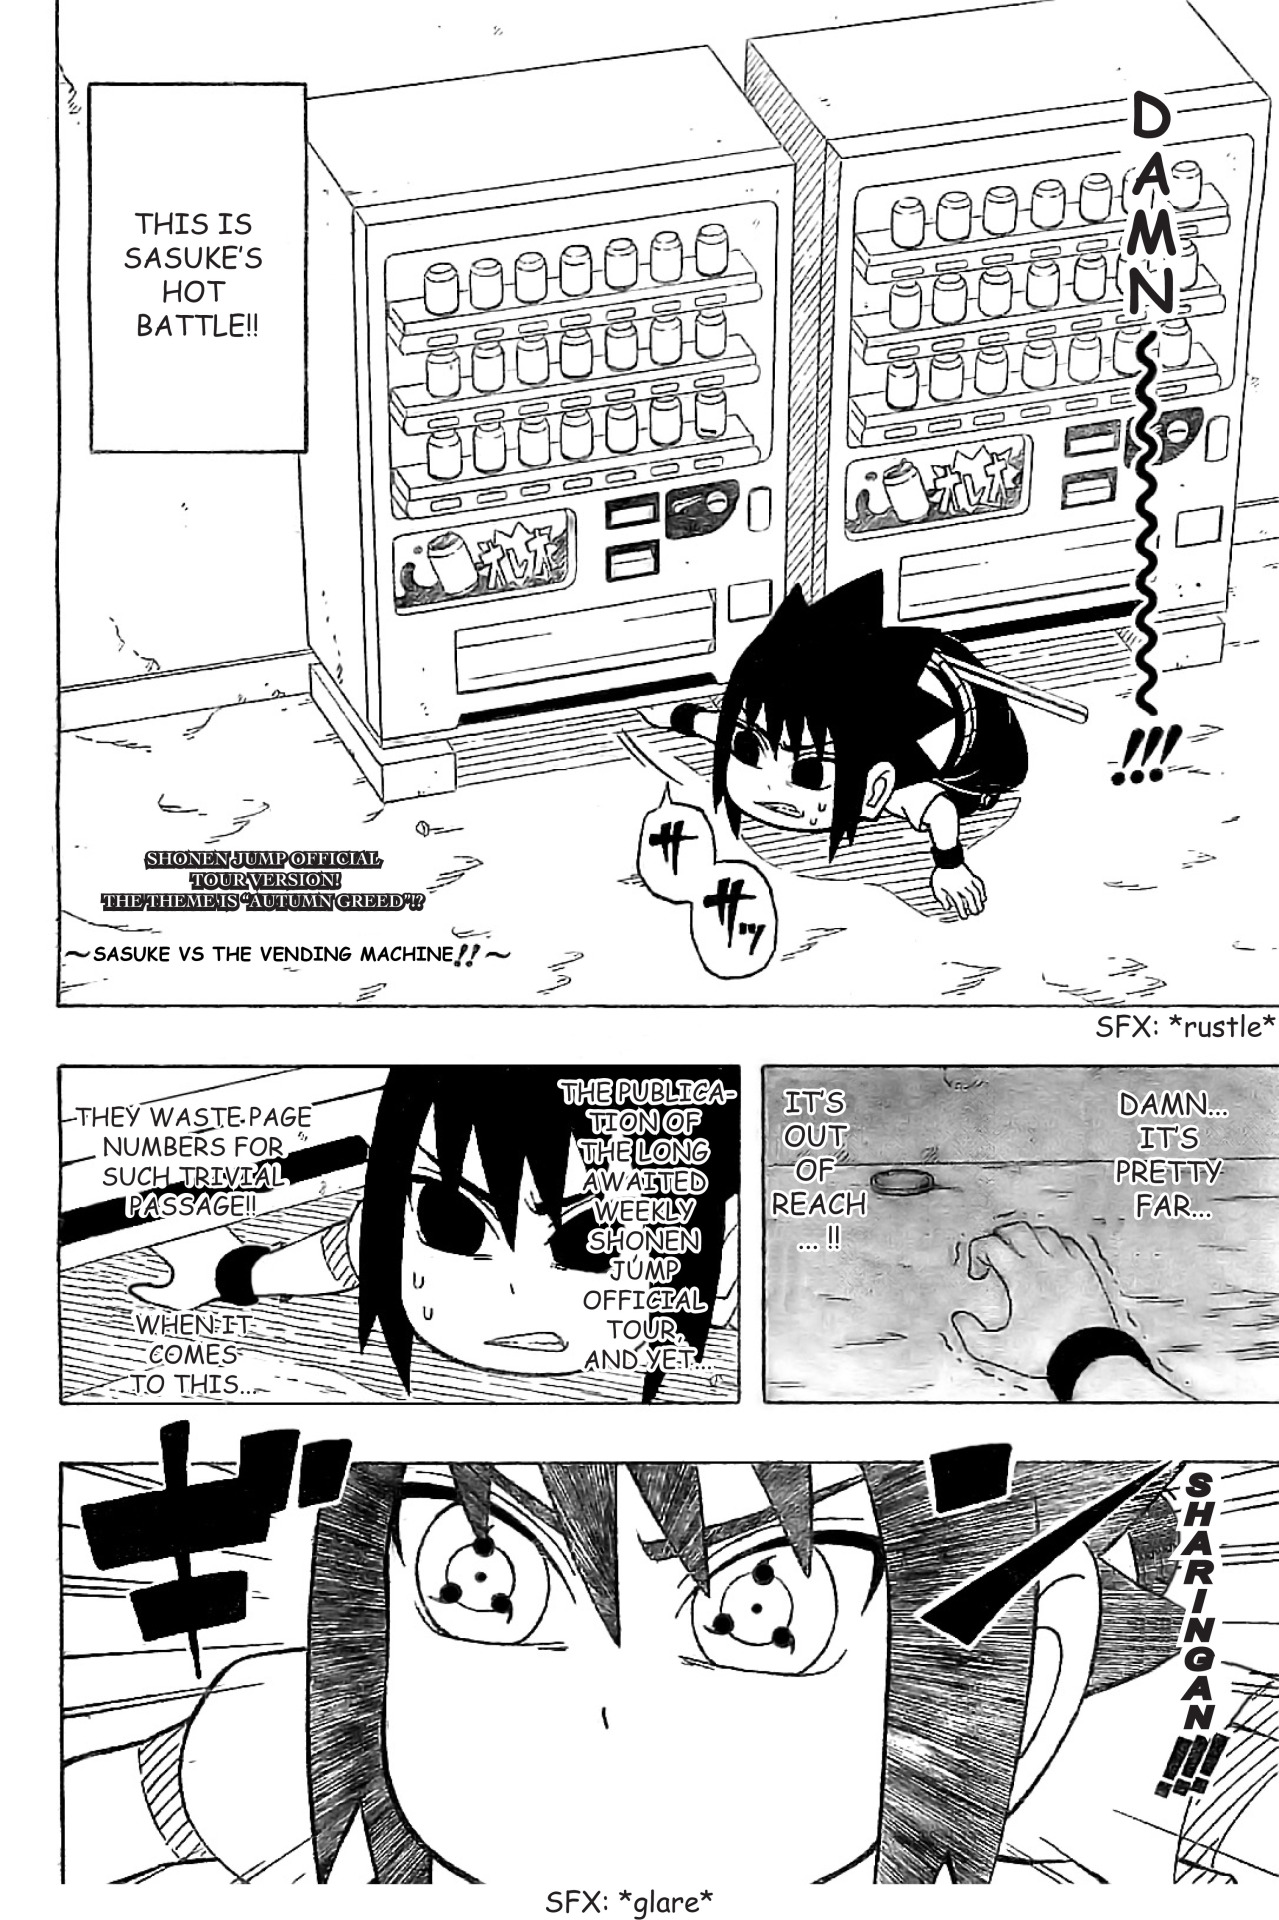 Naruto Vs Sasuke (Battle Scene) , a card pack by Miuzki - INPRNT